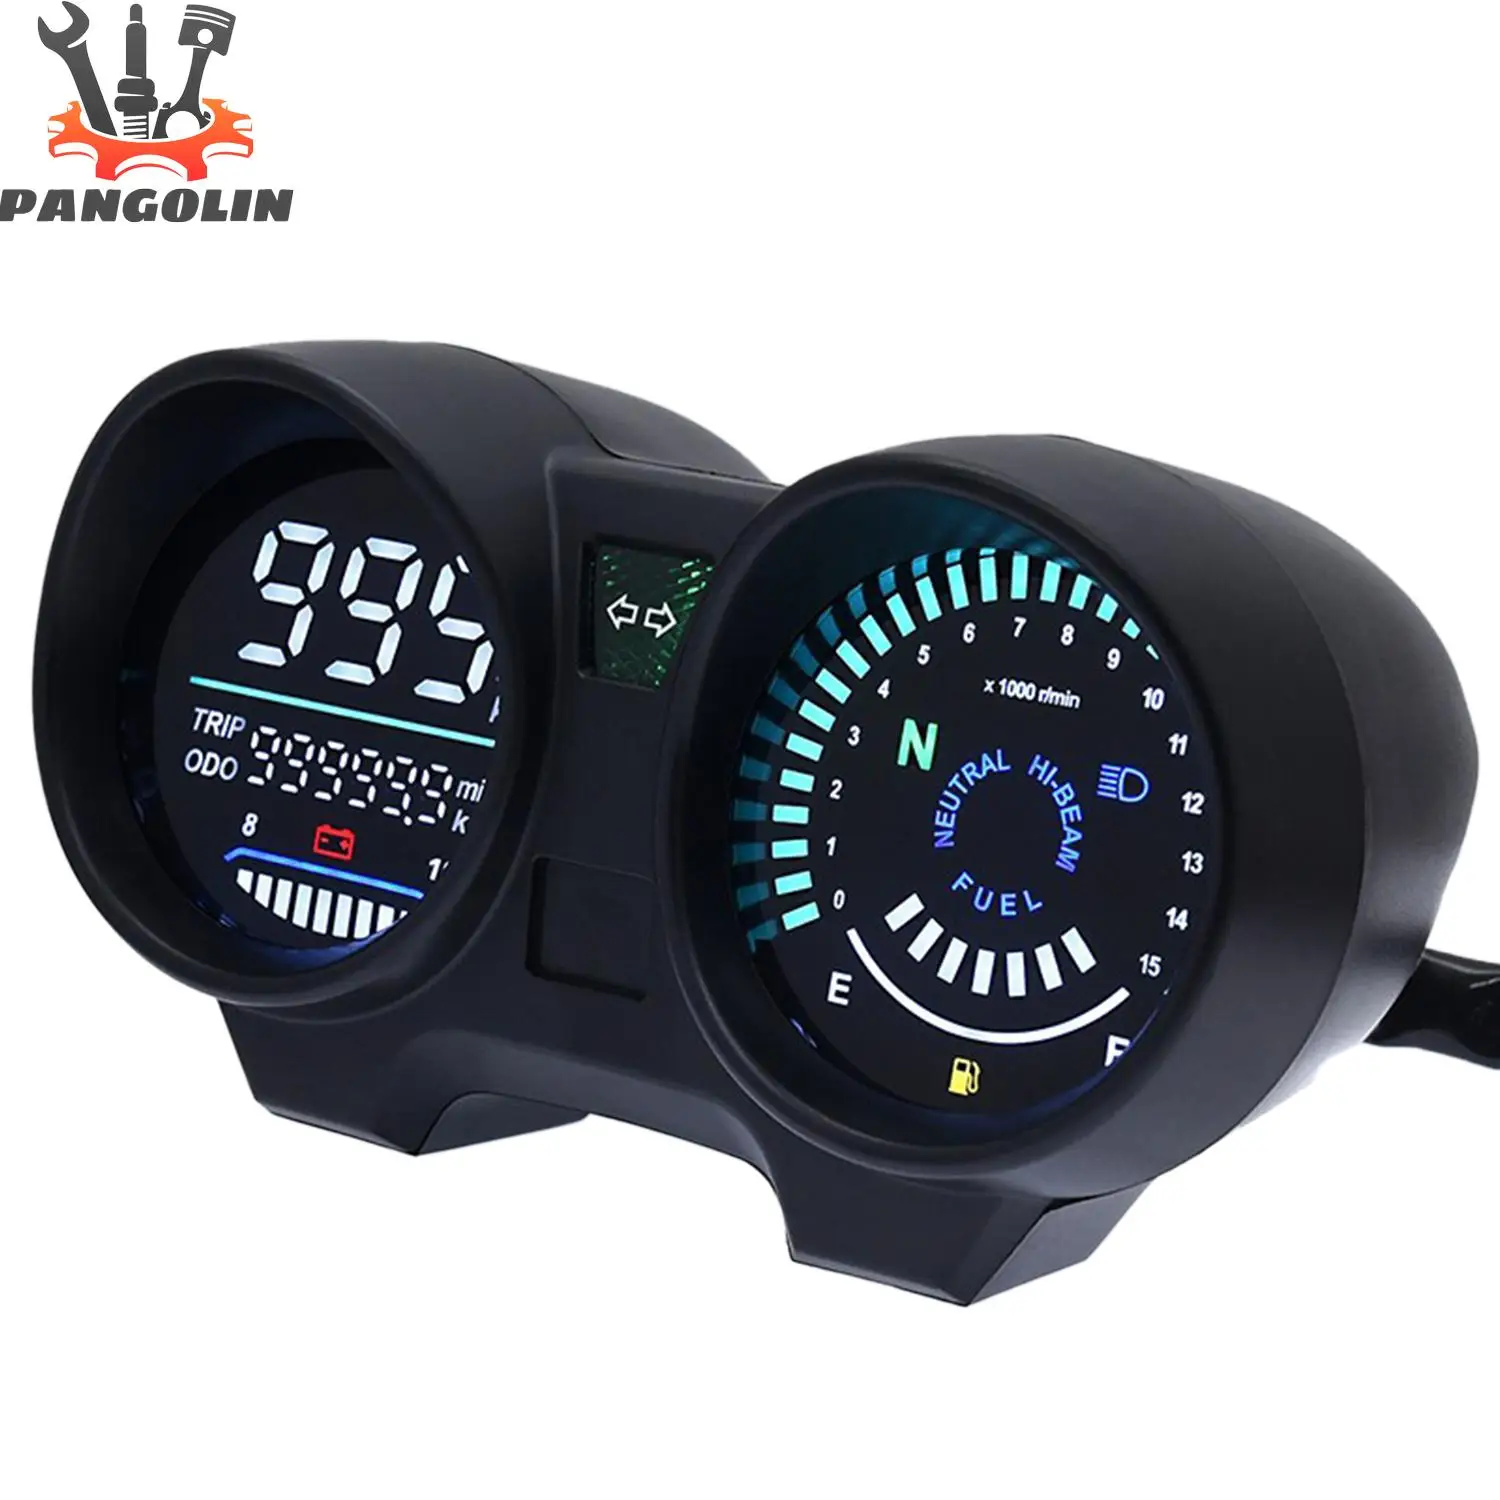 

Motorcycle Speedometer Digital Dashboard LED Electronics for Brazil TITAN 150 Honda CG150 Fan150 2010-2012 with 3 Month Warranty